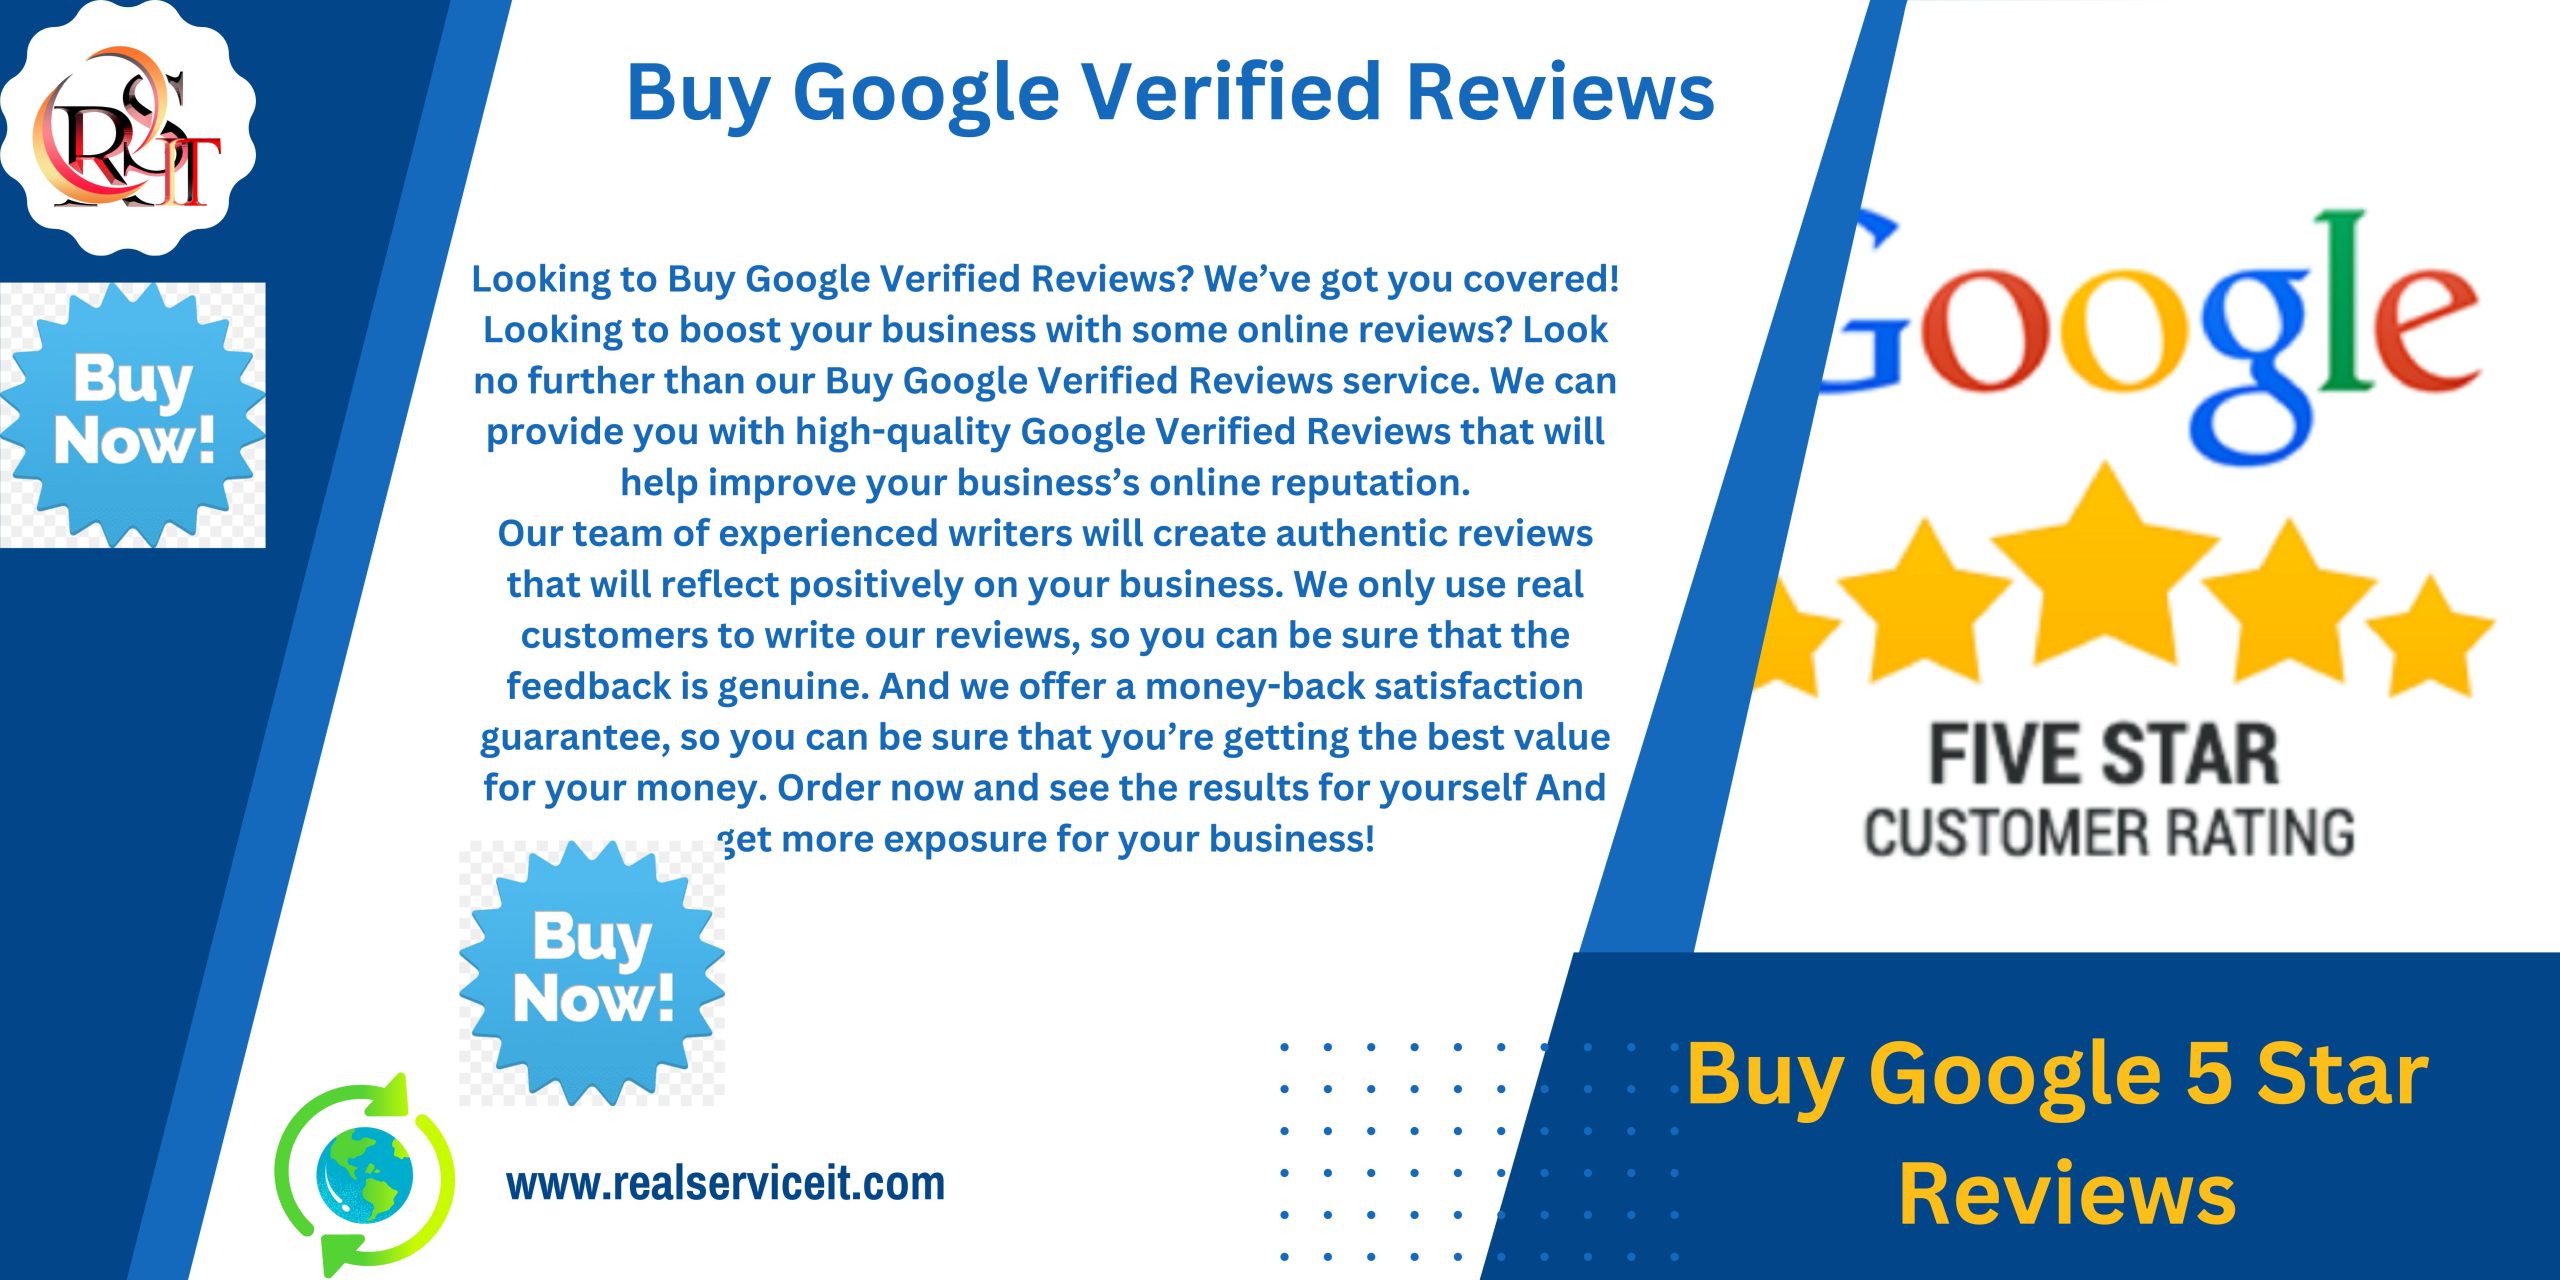 Buy Google Verified Reviews